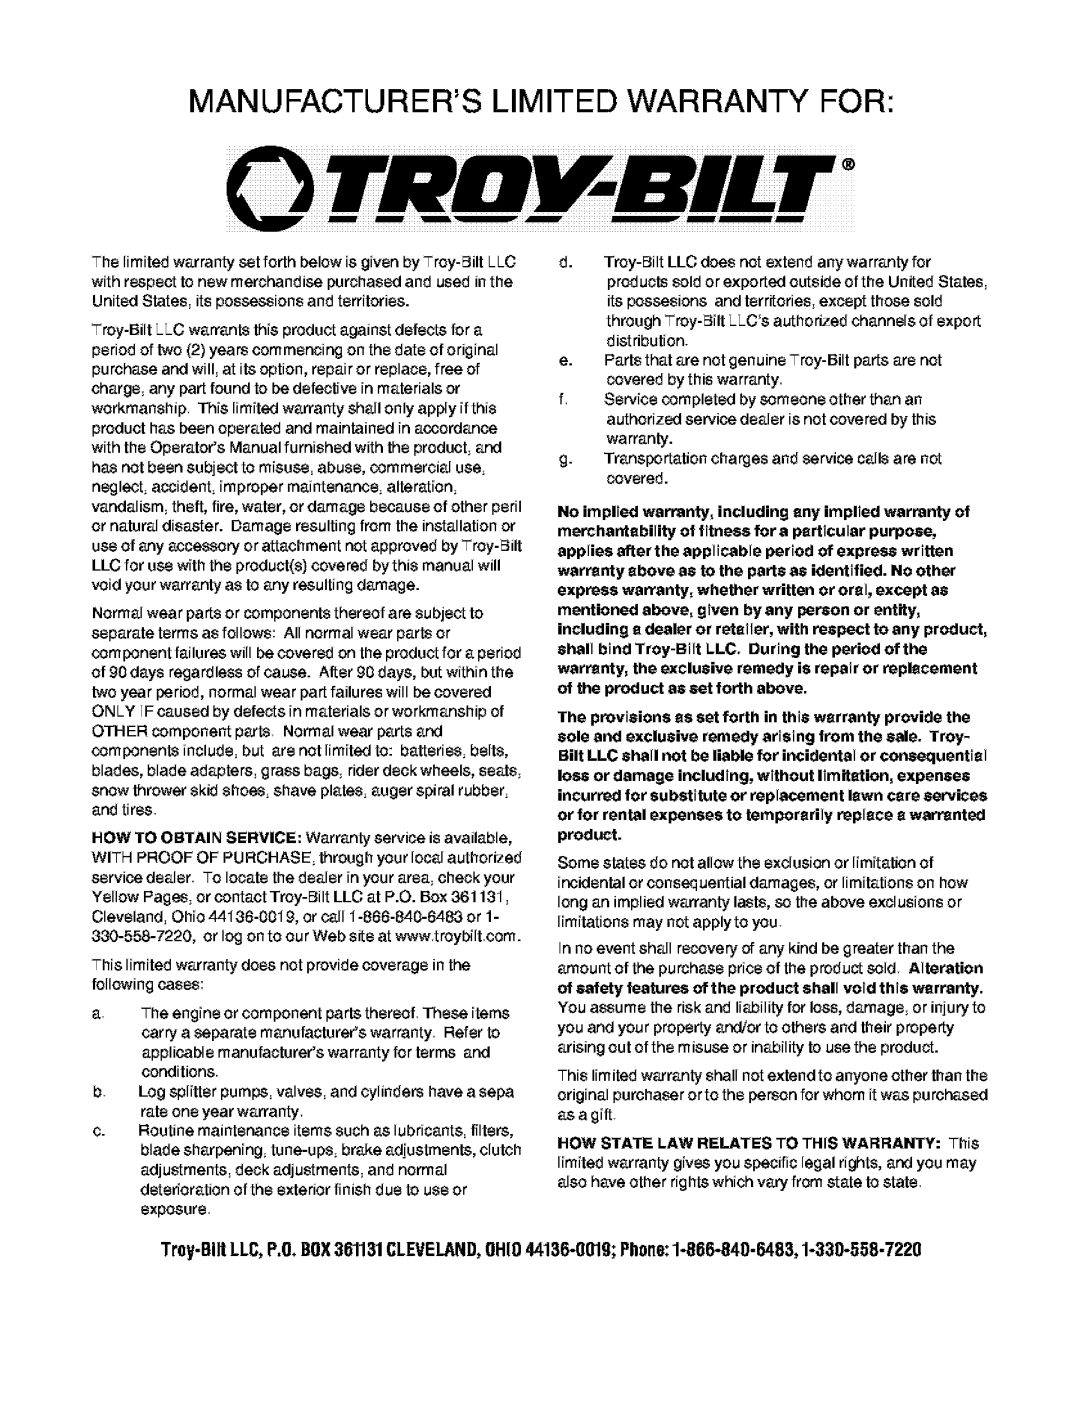 Troy-Bilt 466 manual Manufacturers Limited Warranty For 